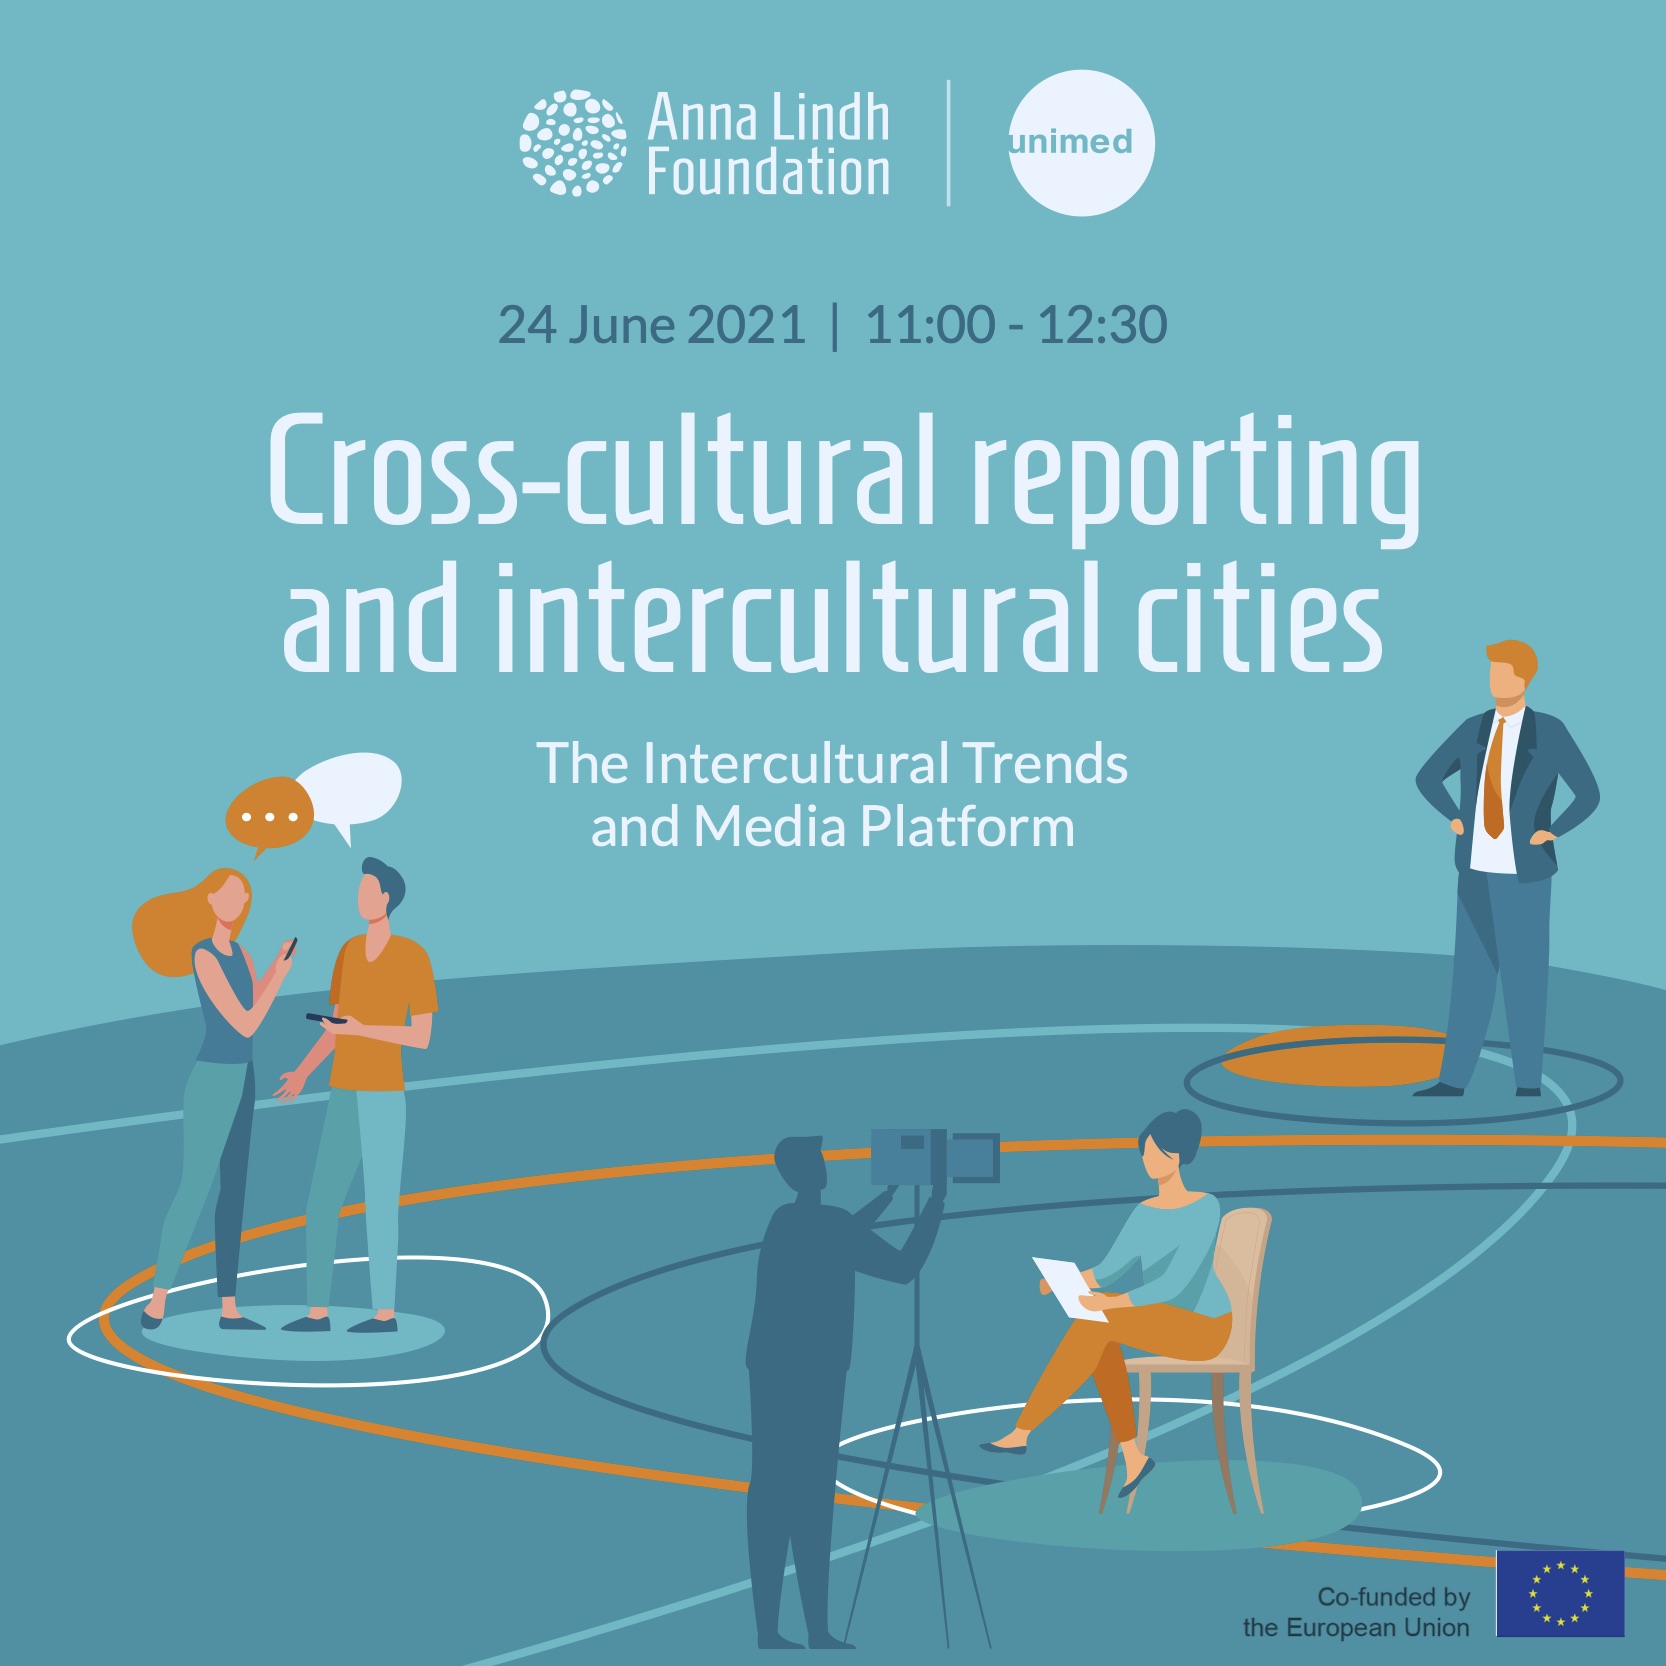 Cross-cultural reporting and intercultural cities